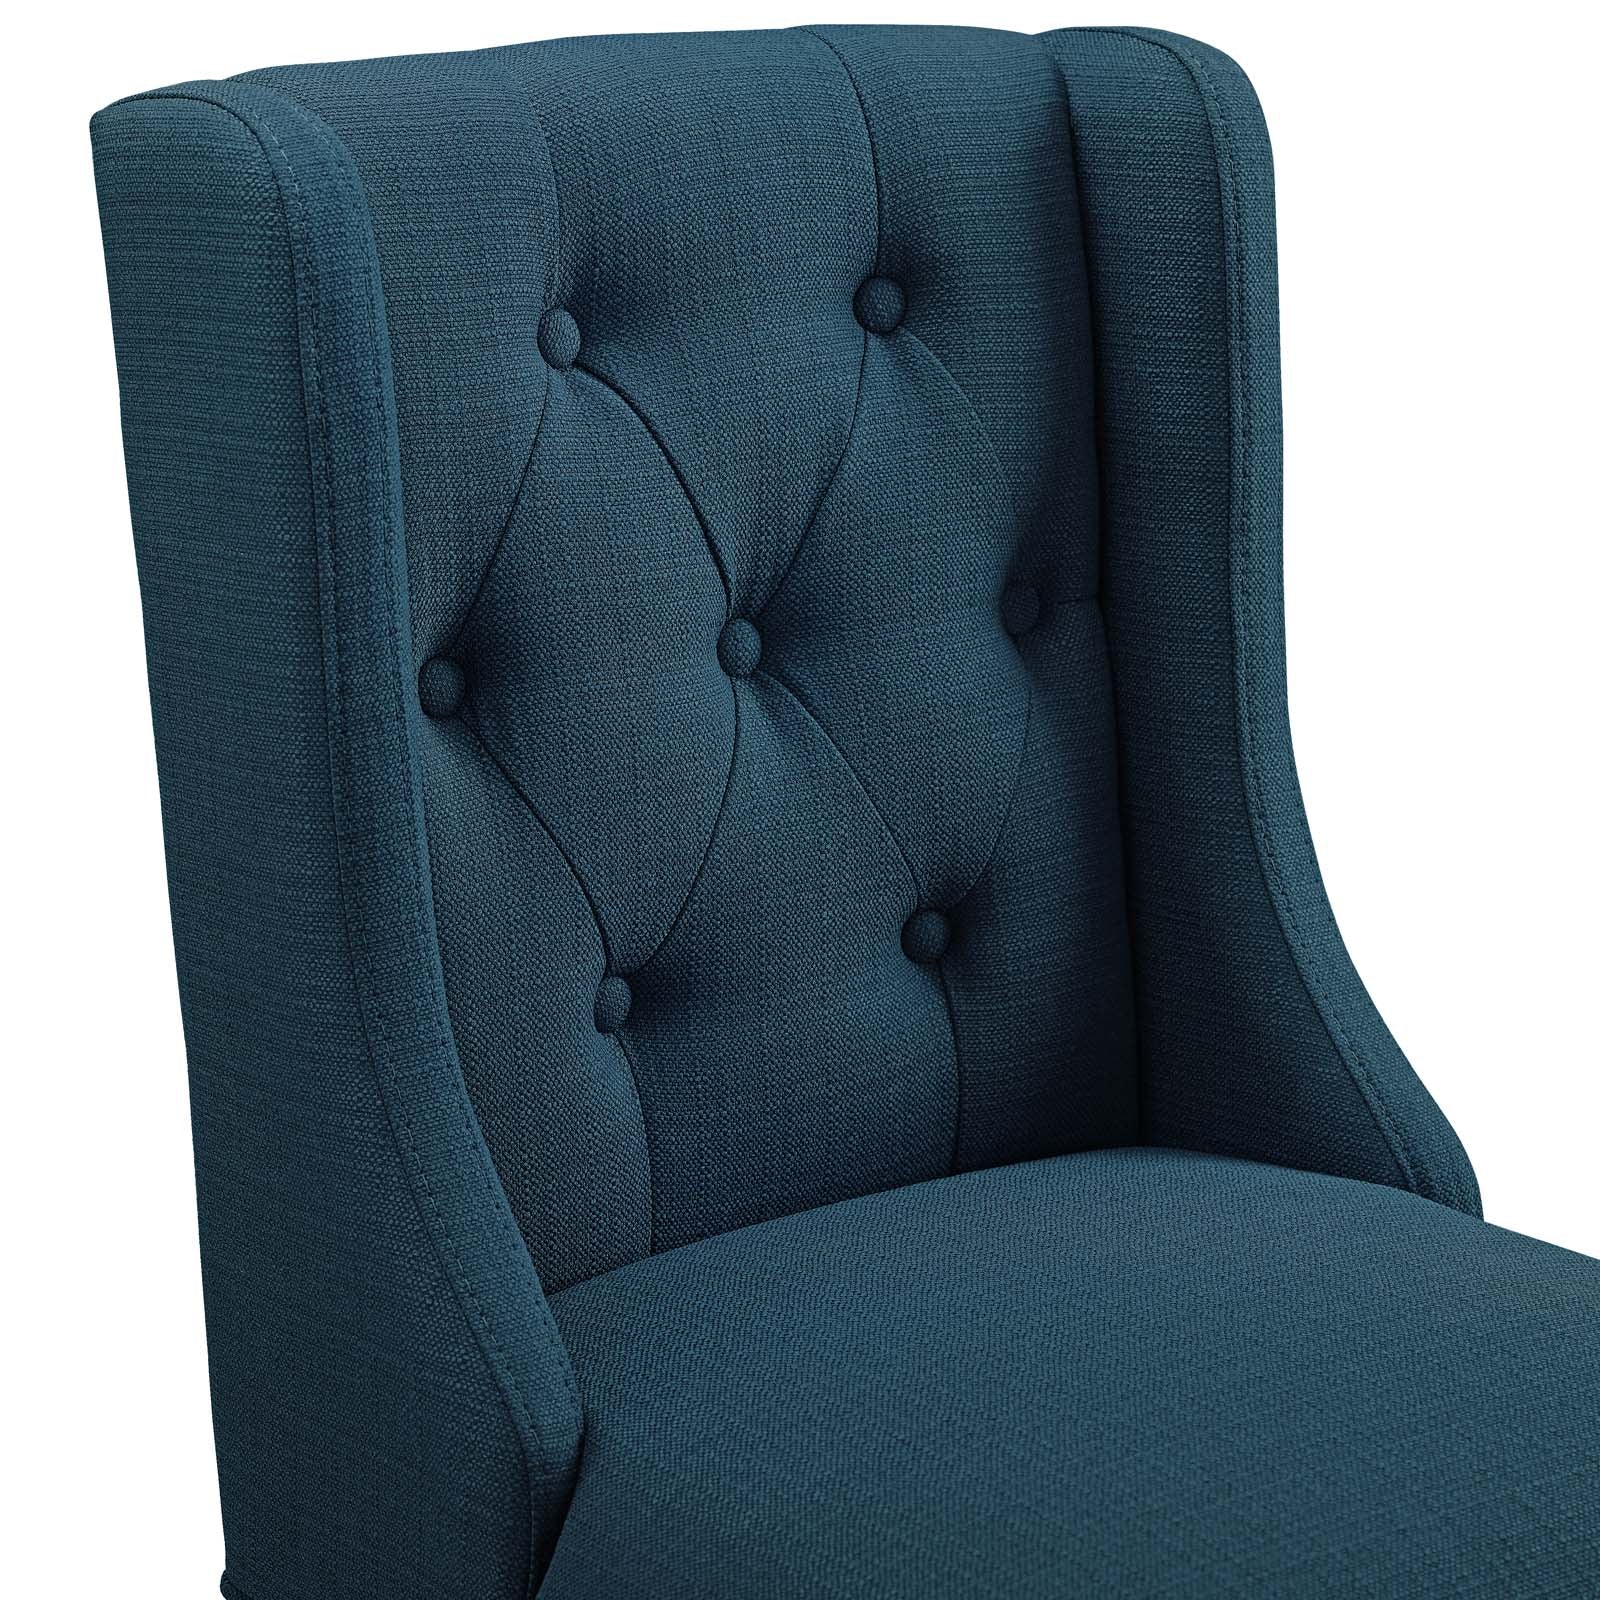 Baronet Counter Bar Stool Upholstered Fabric Set of 2 - East Shore Modern Home Furnishings